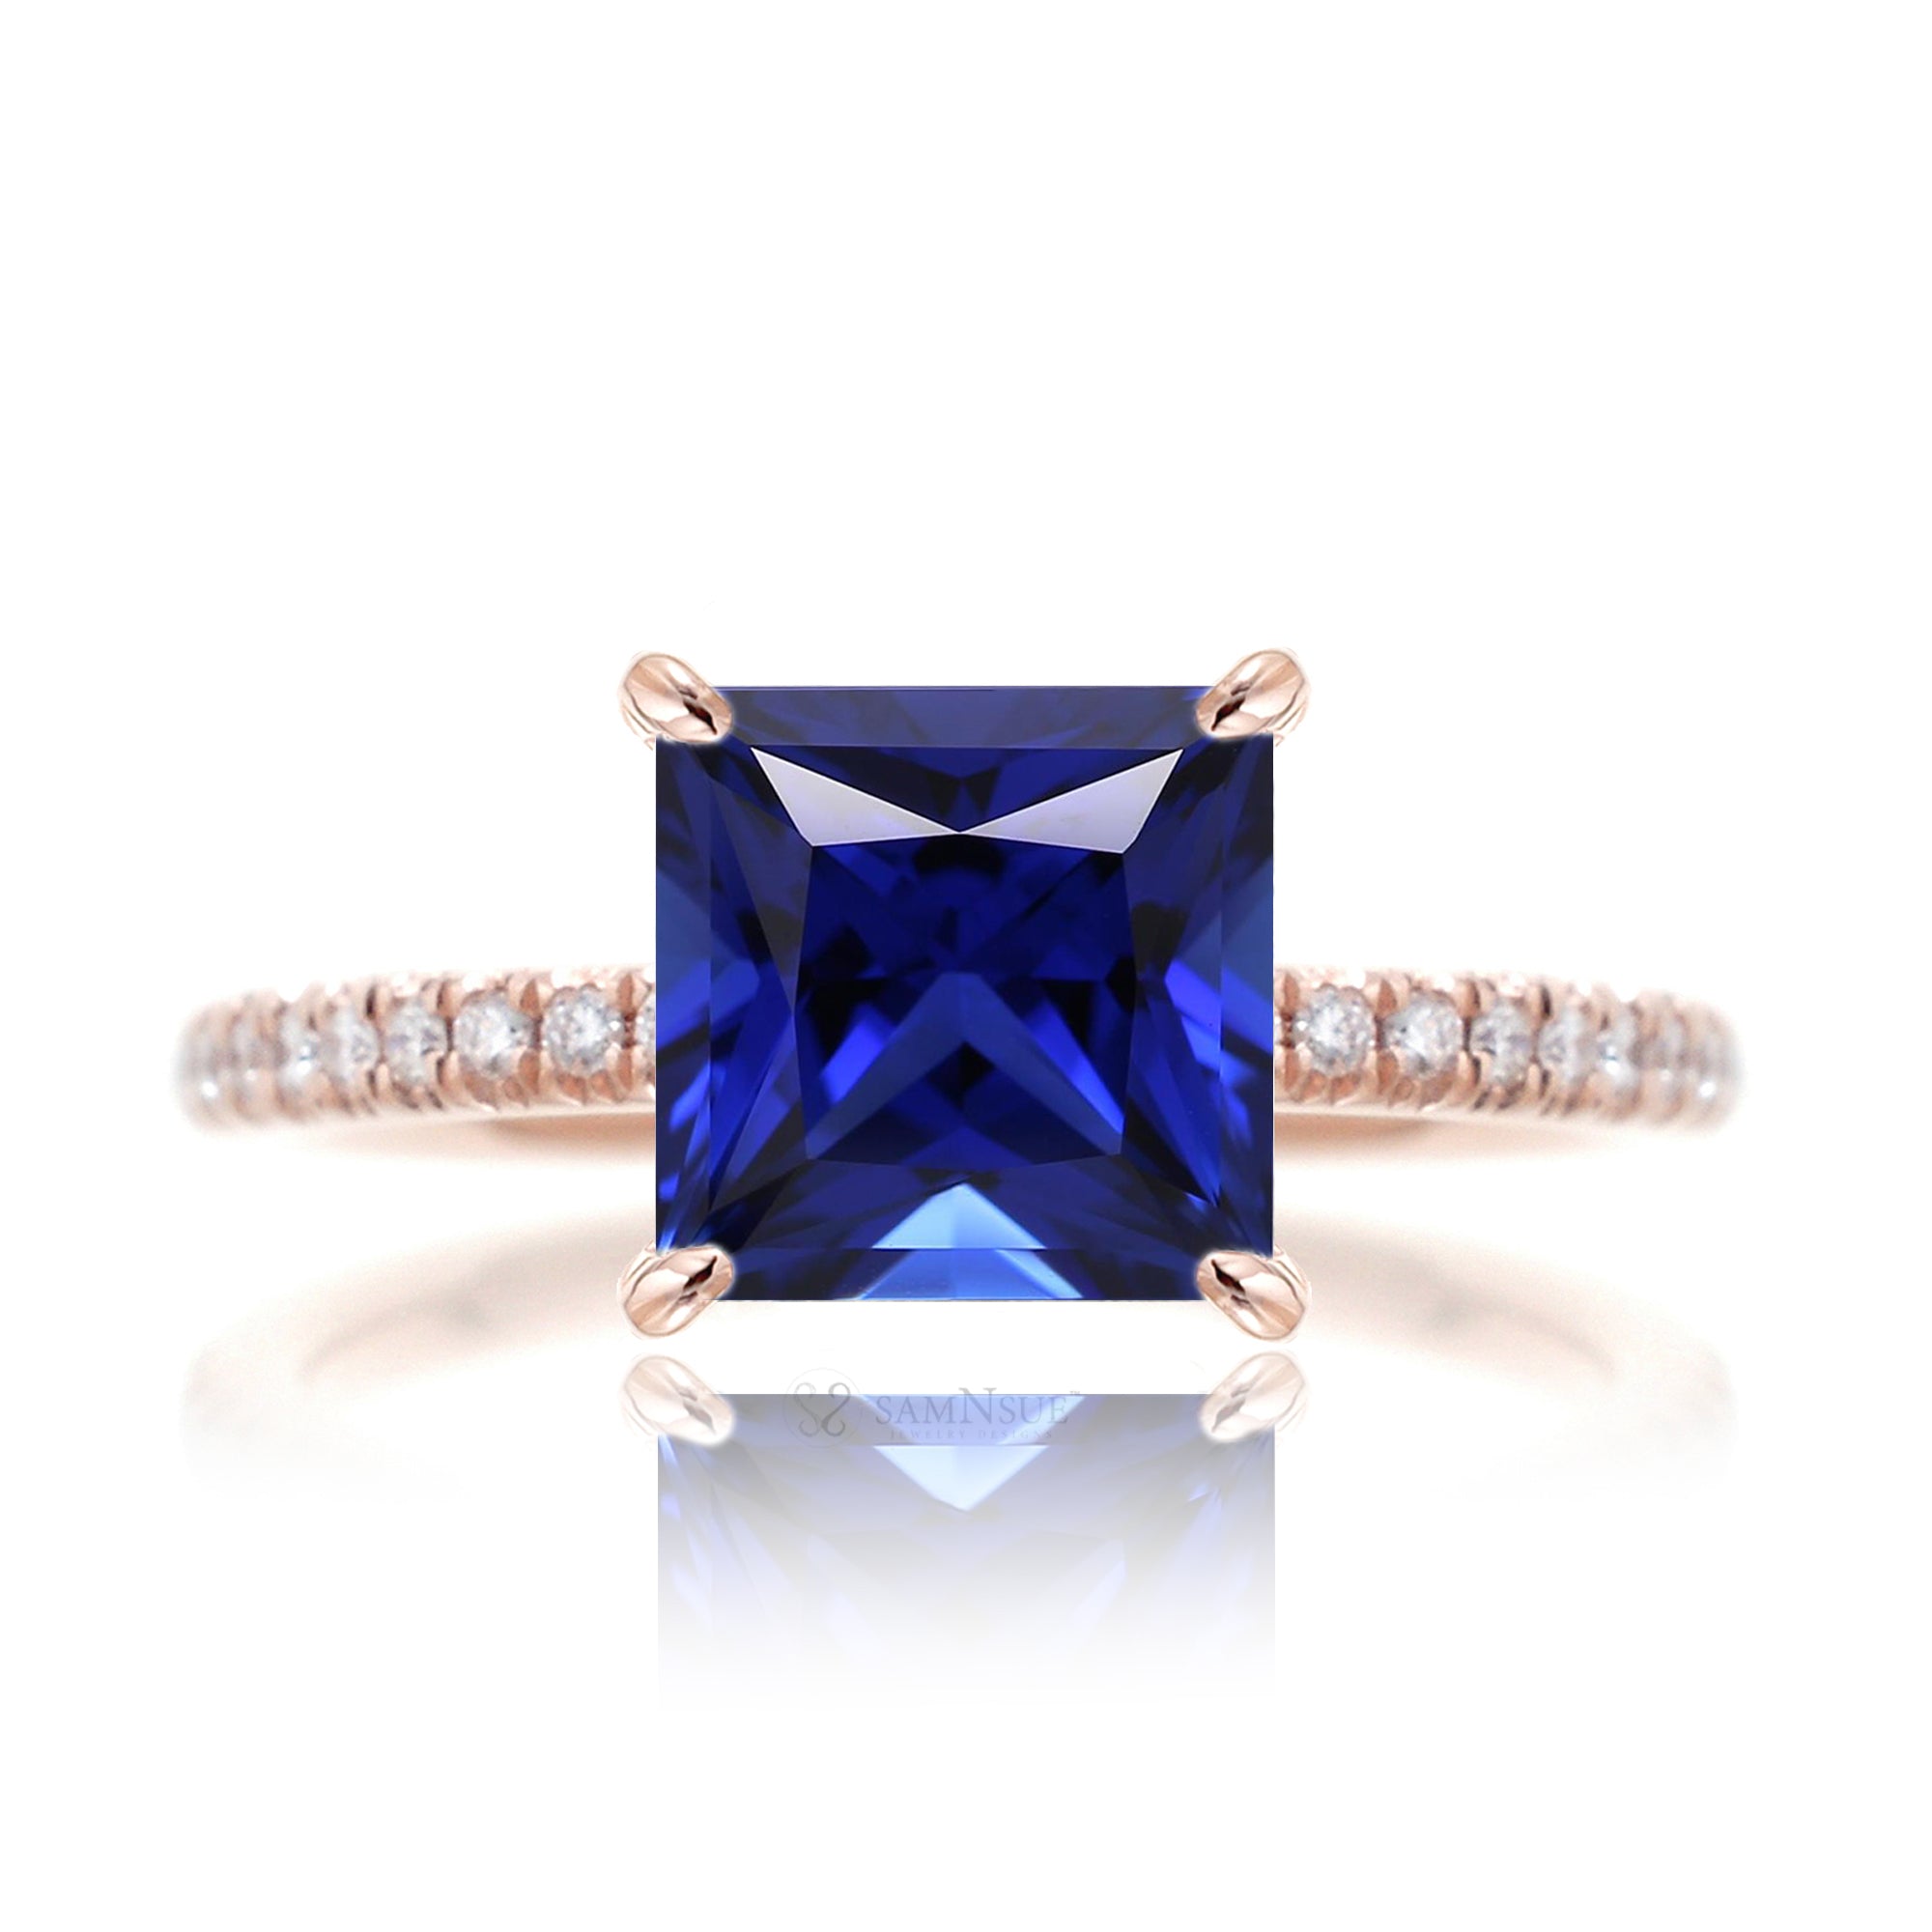 Princess cut blue sapphire diamond engagement ring rose  gold - the Ava